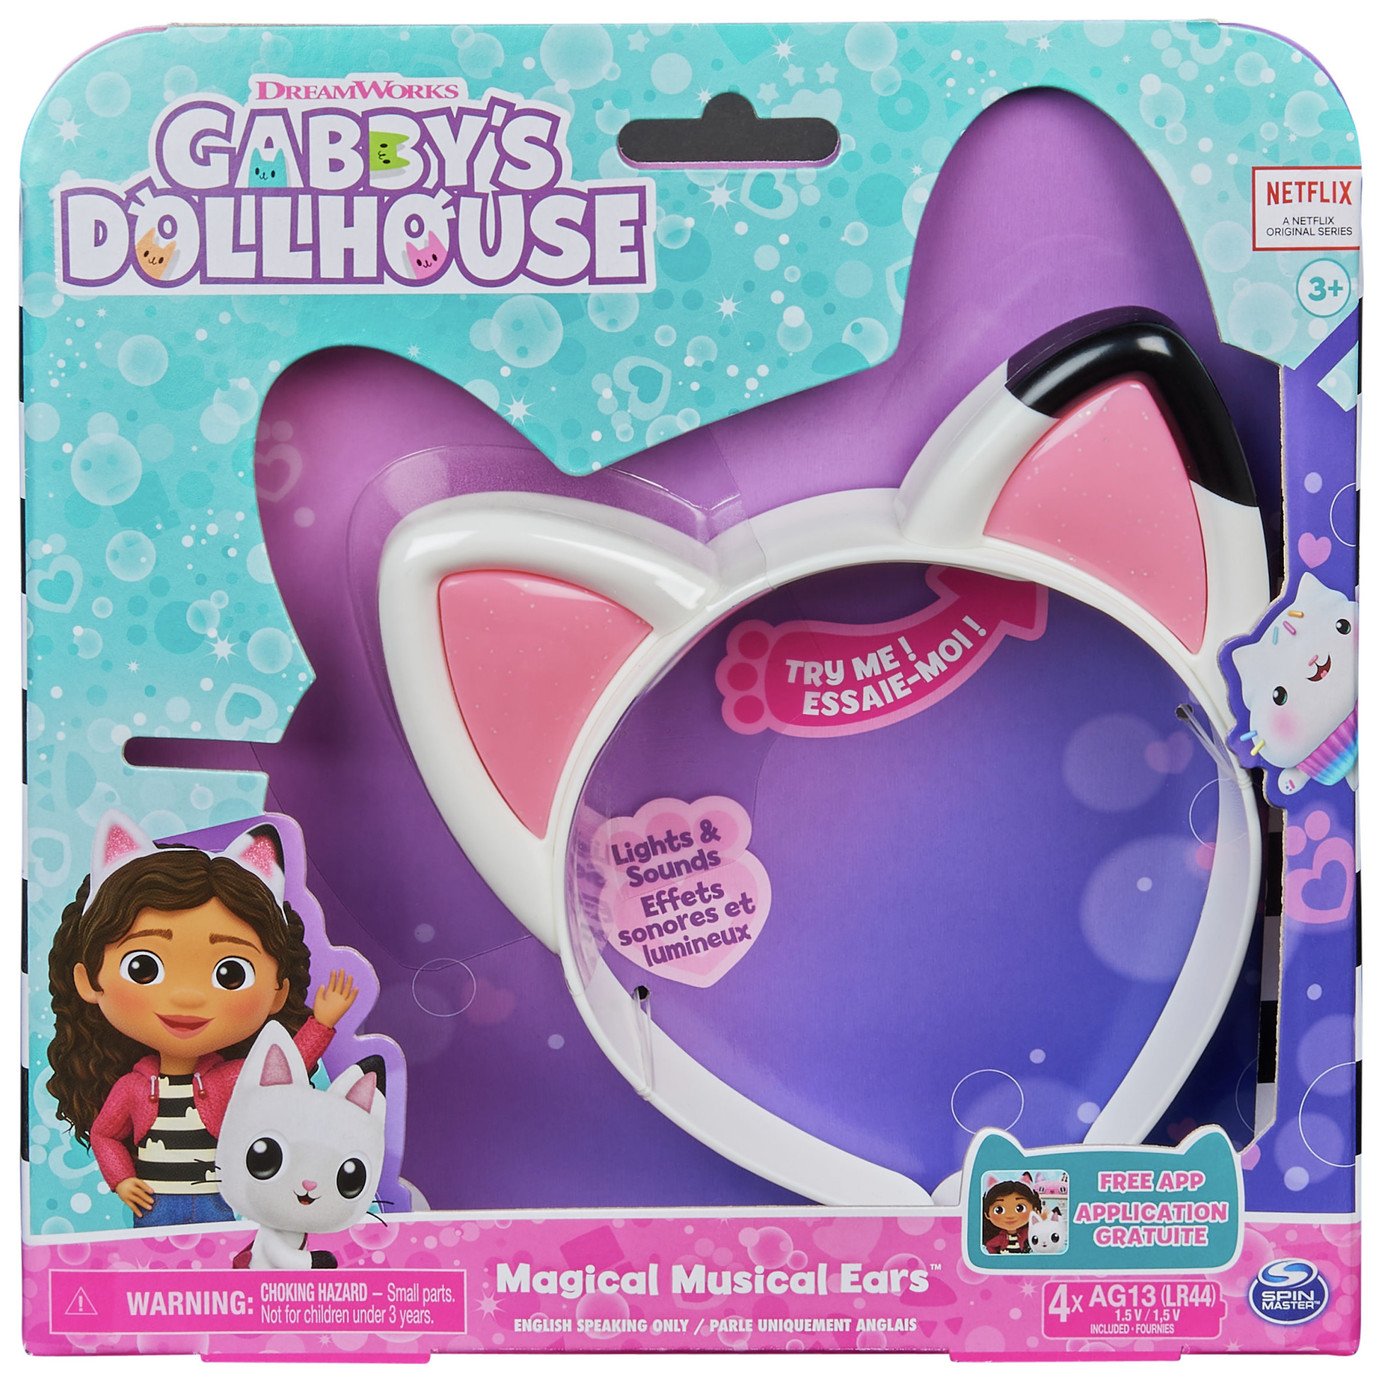 Gabby's Dollhouse Musical Magic Ears review